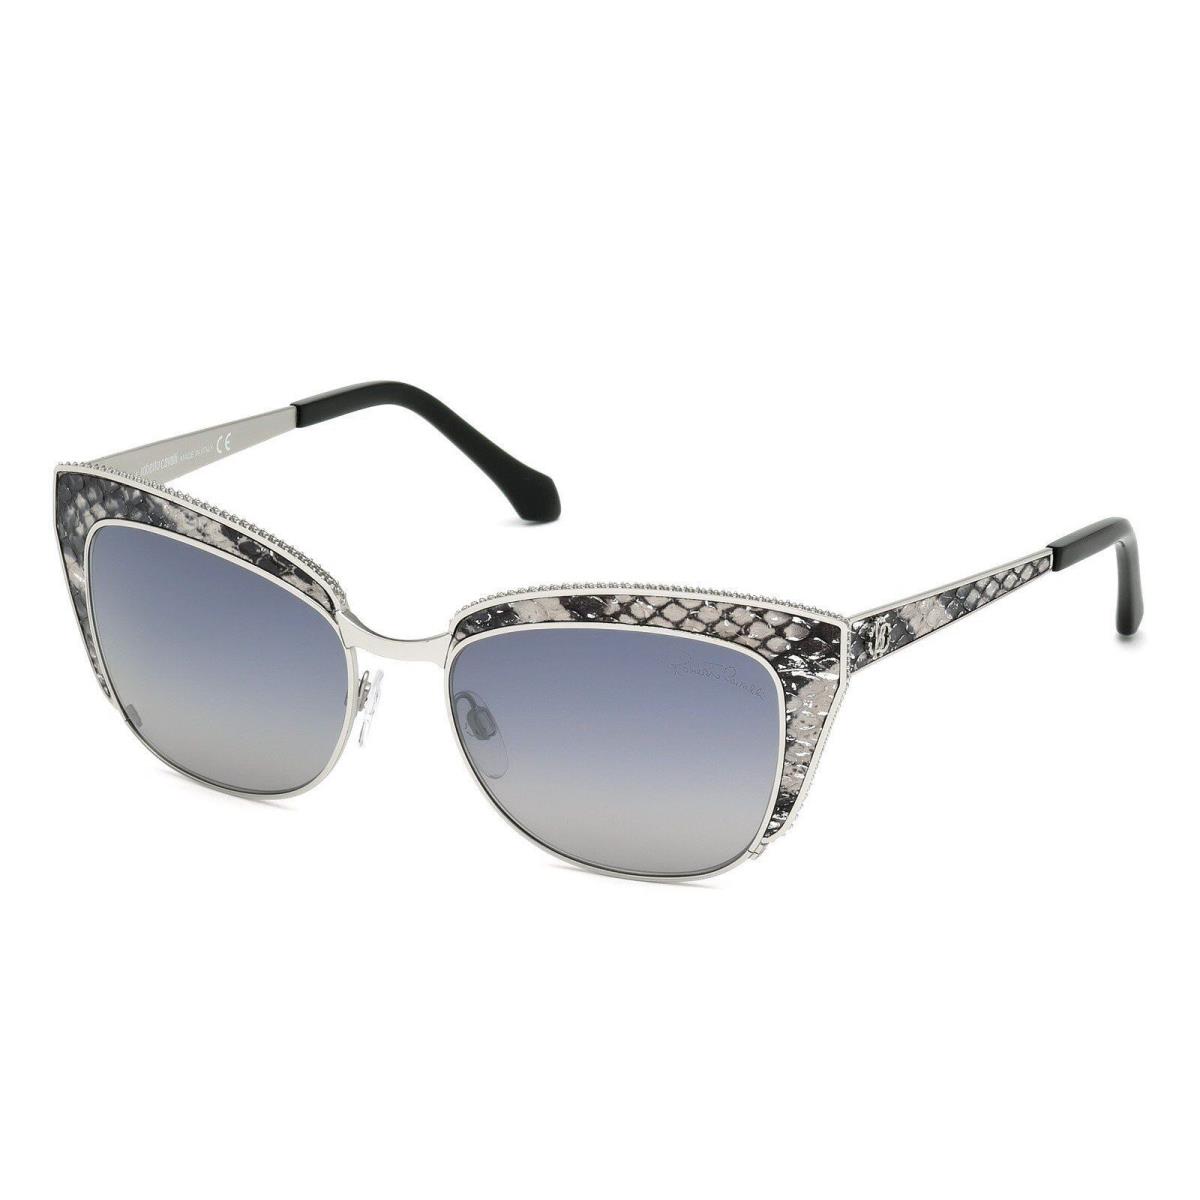 Roberto Cavalli Sunglasses RC 973S 16C Shiny Palladium / Gradient Smoke 54mm